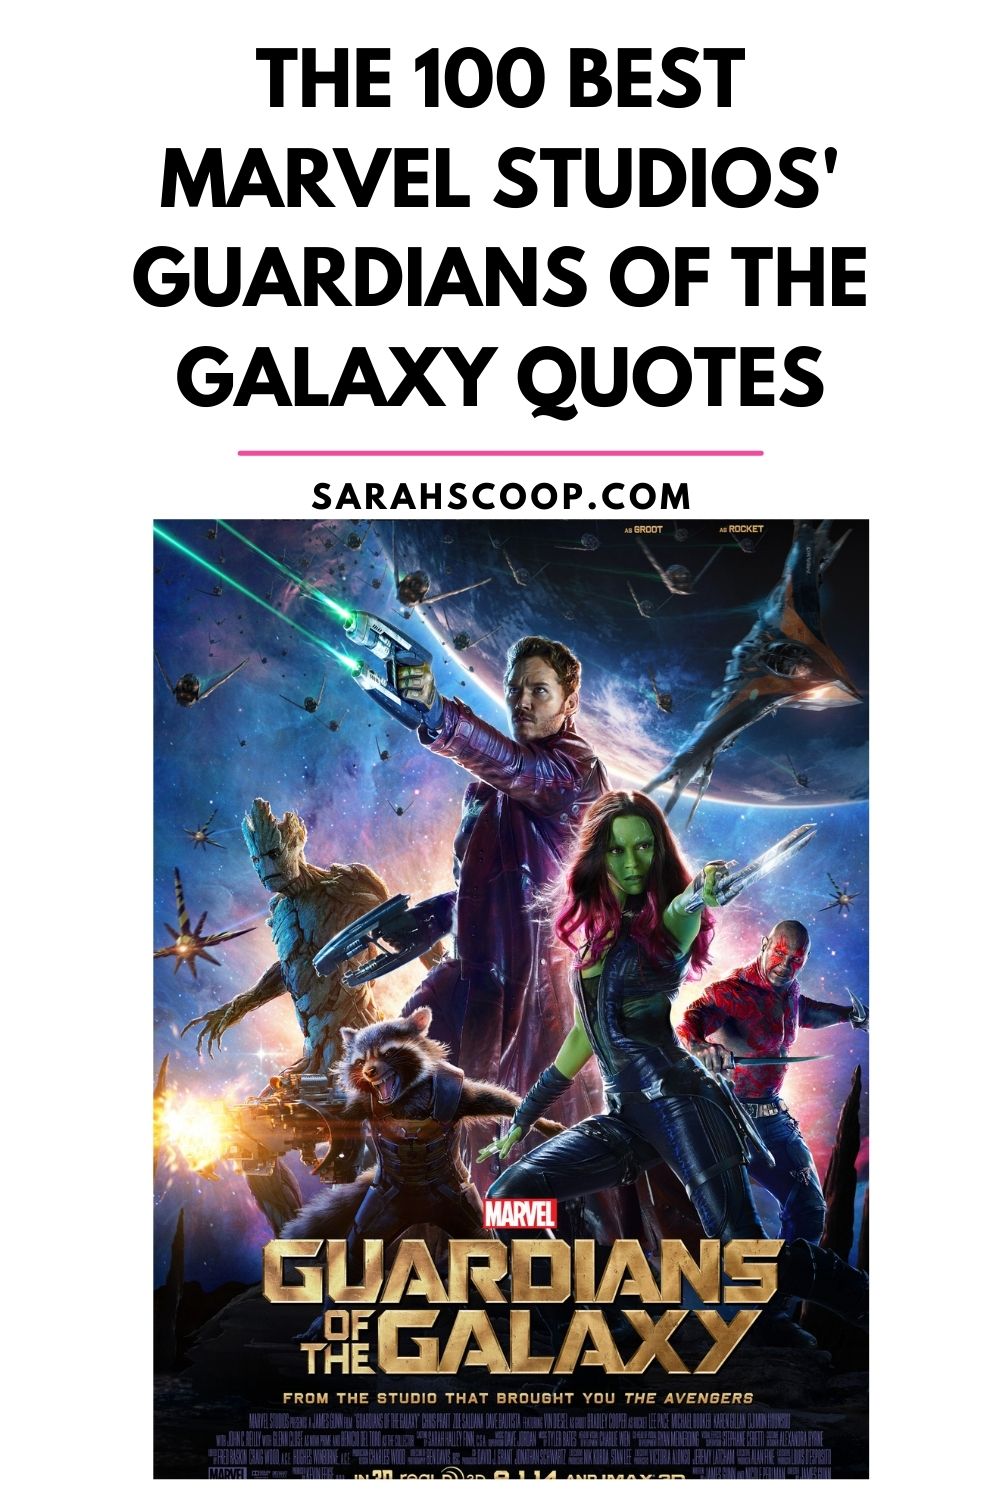 100 Best Marvel Studios' Guardians of the Galaxy Quotes - Sarah Scoop